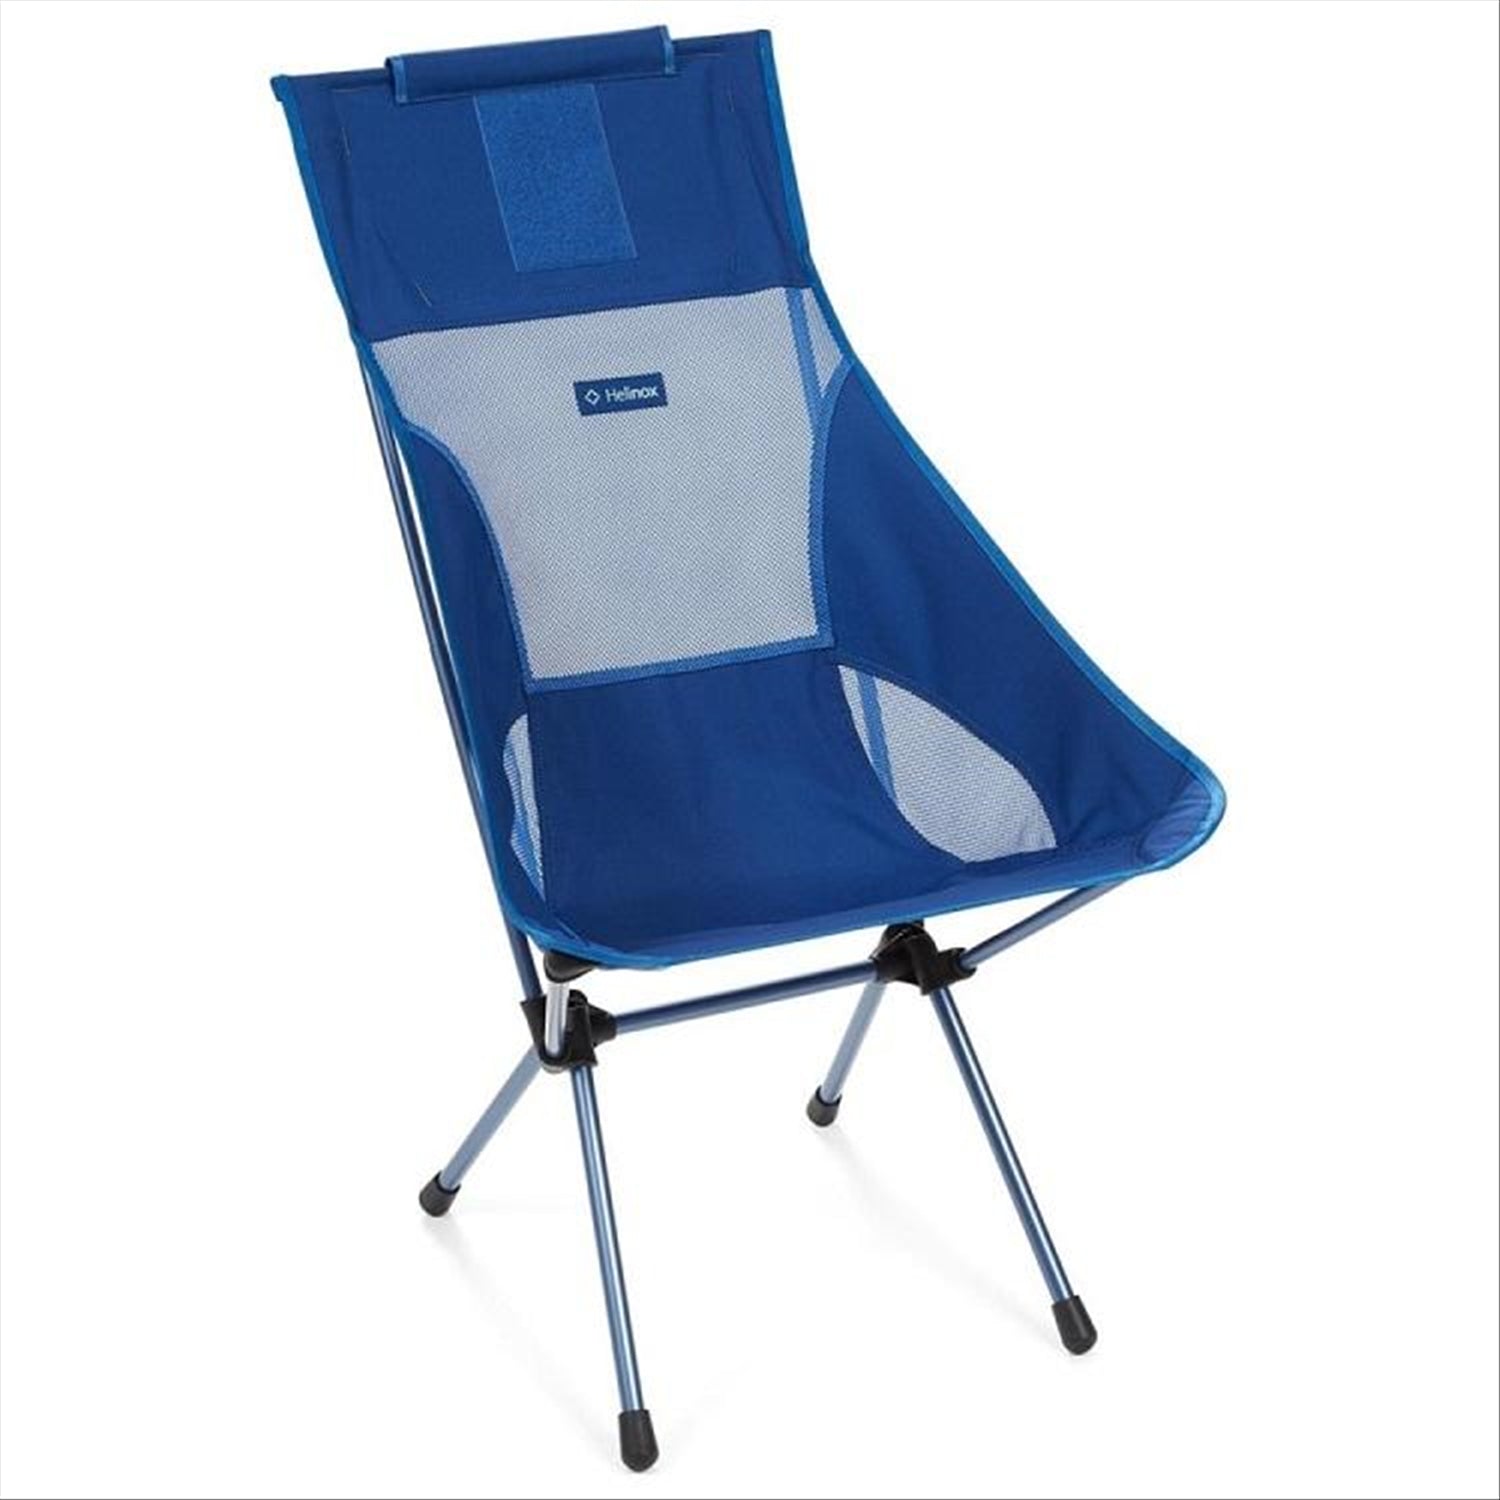 Helinox Helinox Sunset Chair